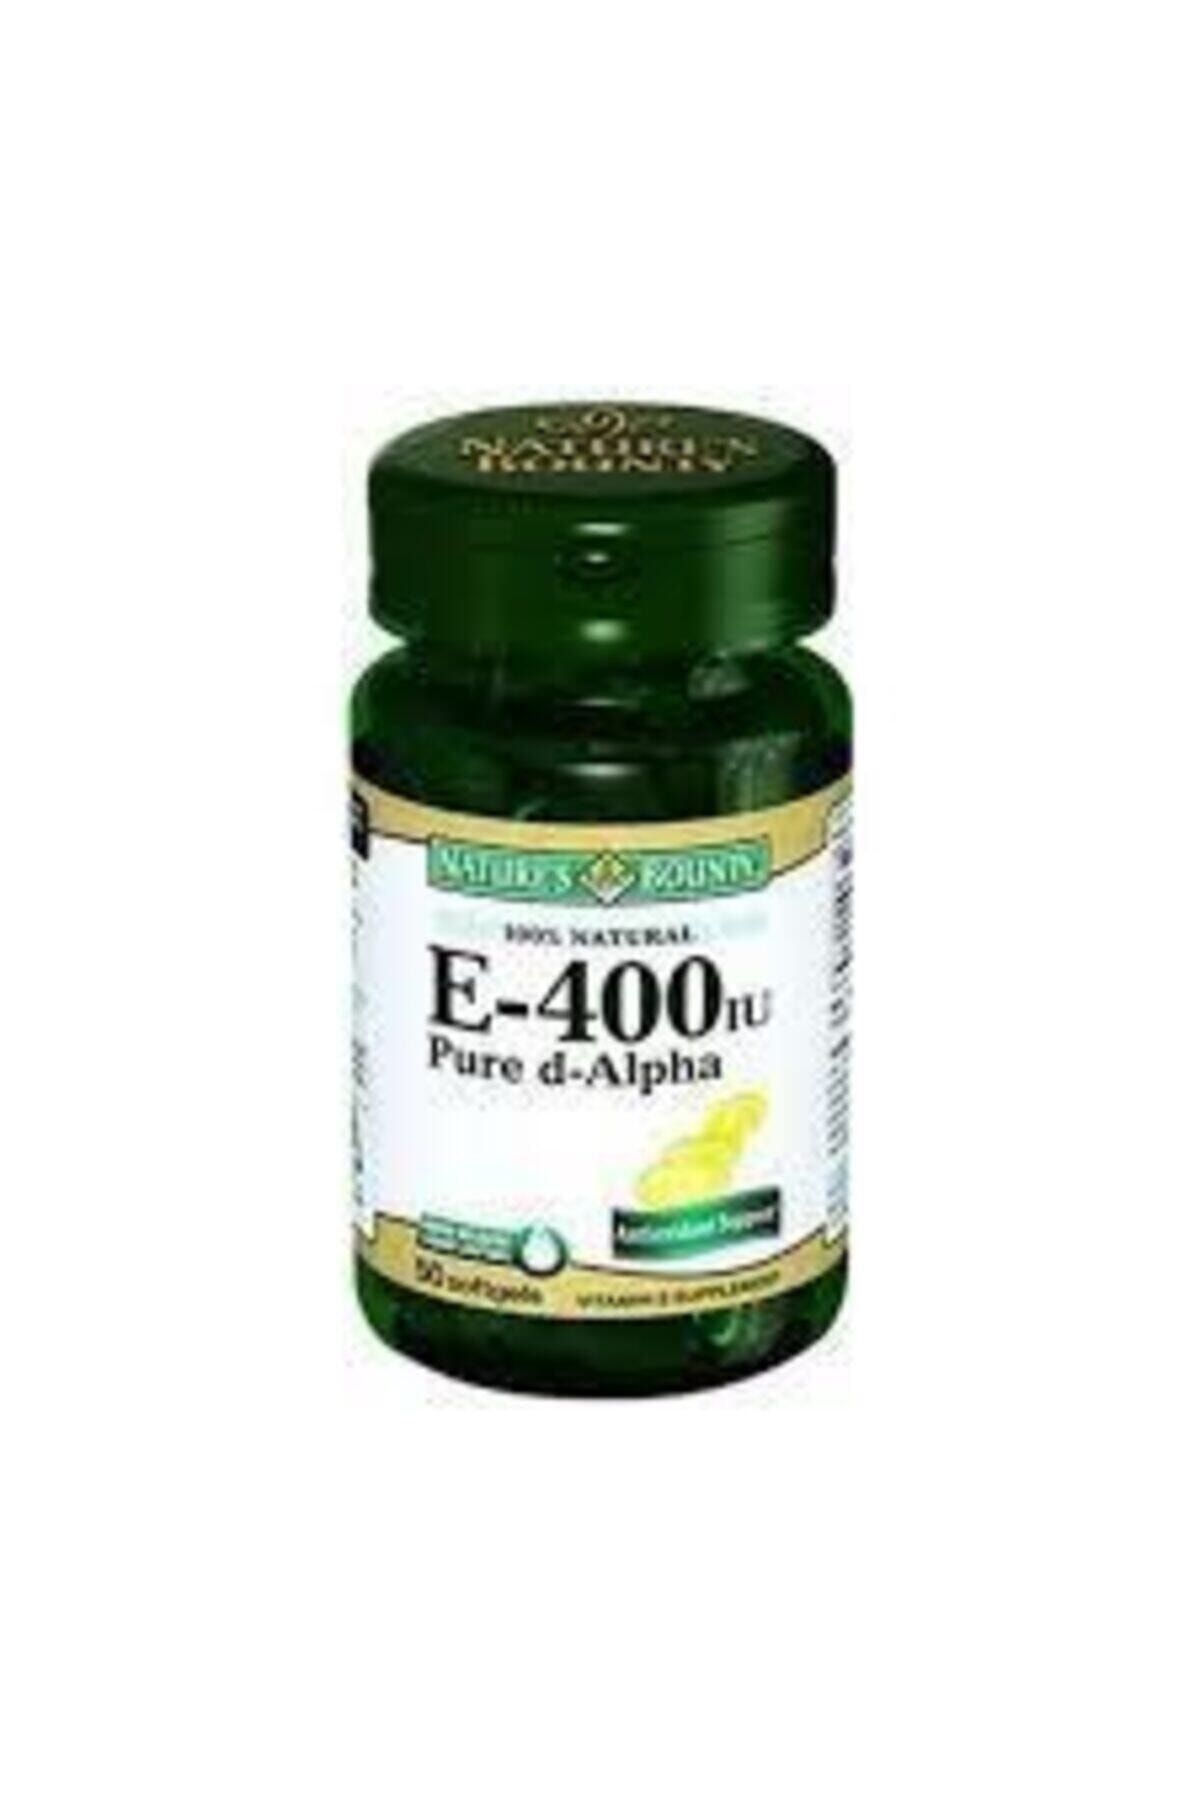 Natures Bounty Vitamin E-400 Iu 50 Softgel